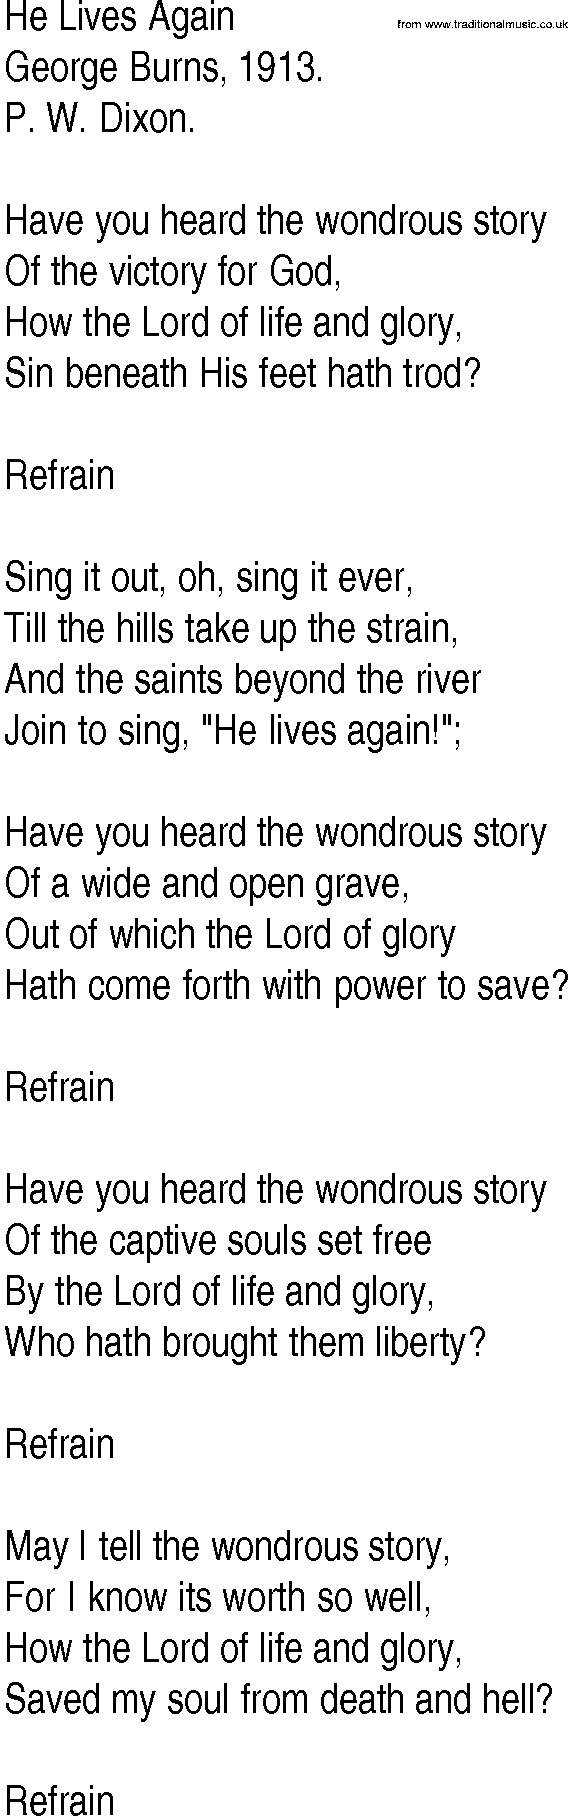 Hymn and Gospel Song: He Lives Again by George Burns lyrics